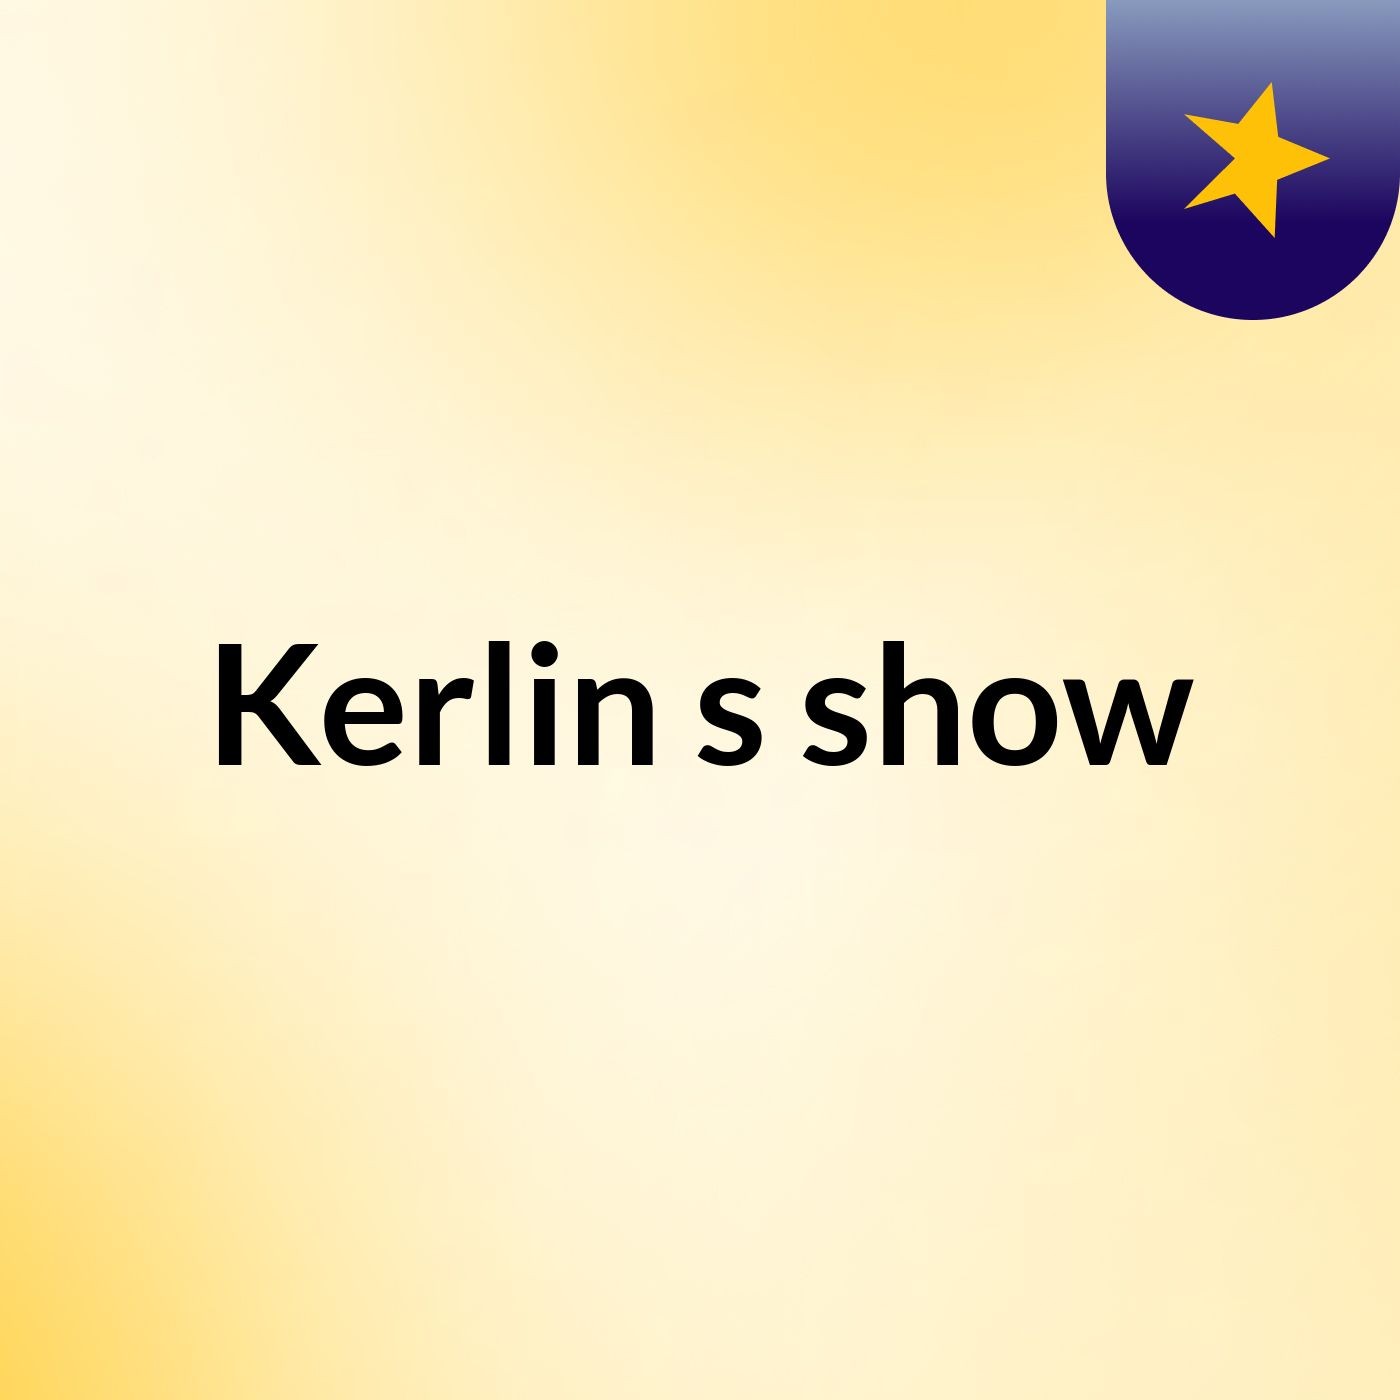 Kerlin's show